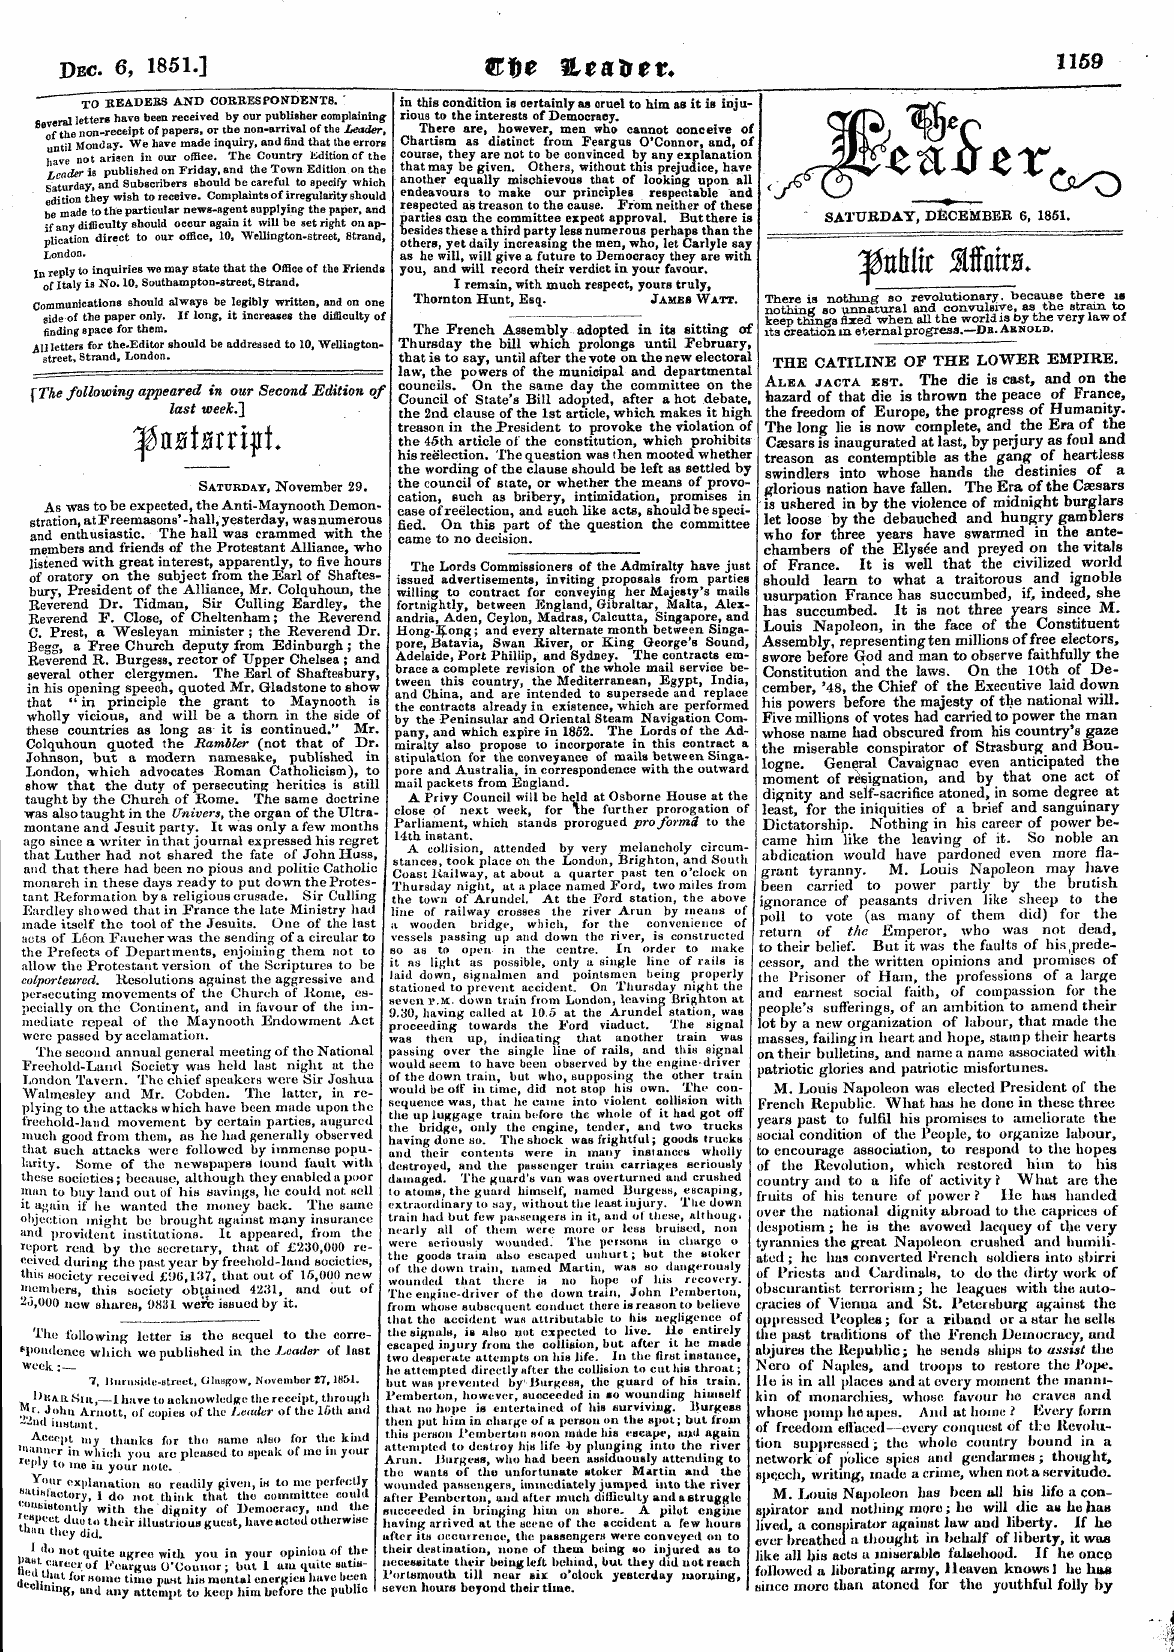 Leader (1850-1860): jS F Y, Country edition - " Saturday, December 6, 1851.